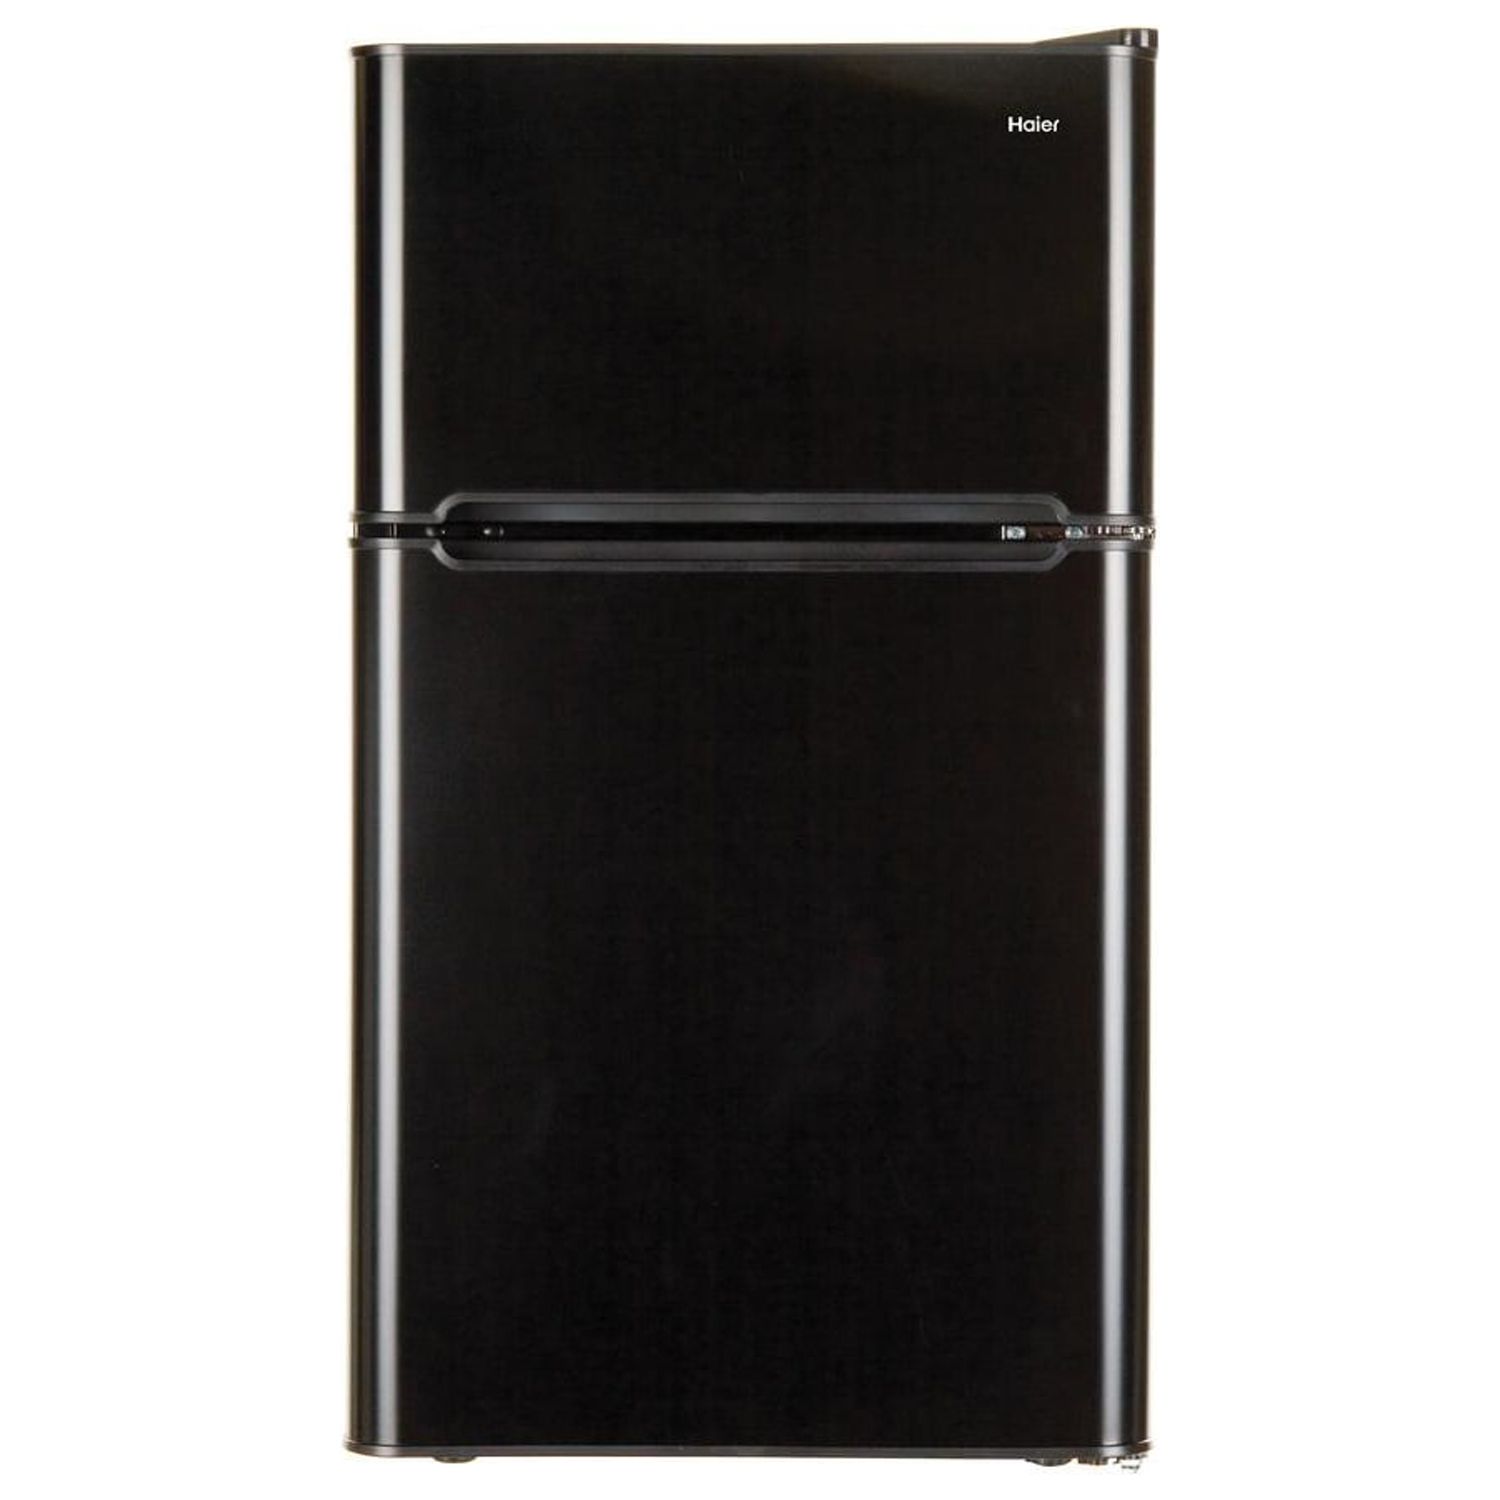 Haier 3.2 Cu Ft Two Door Refrigerator with Freezer HC32TW10SB, Black - image 4 of 4